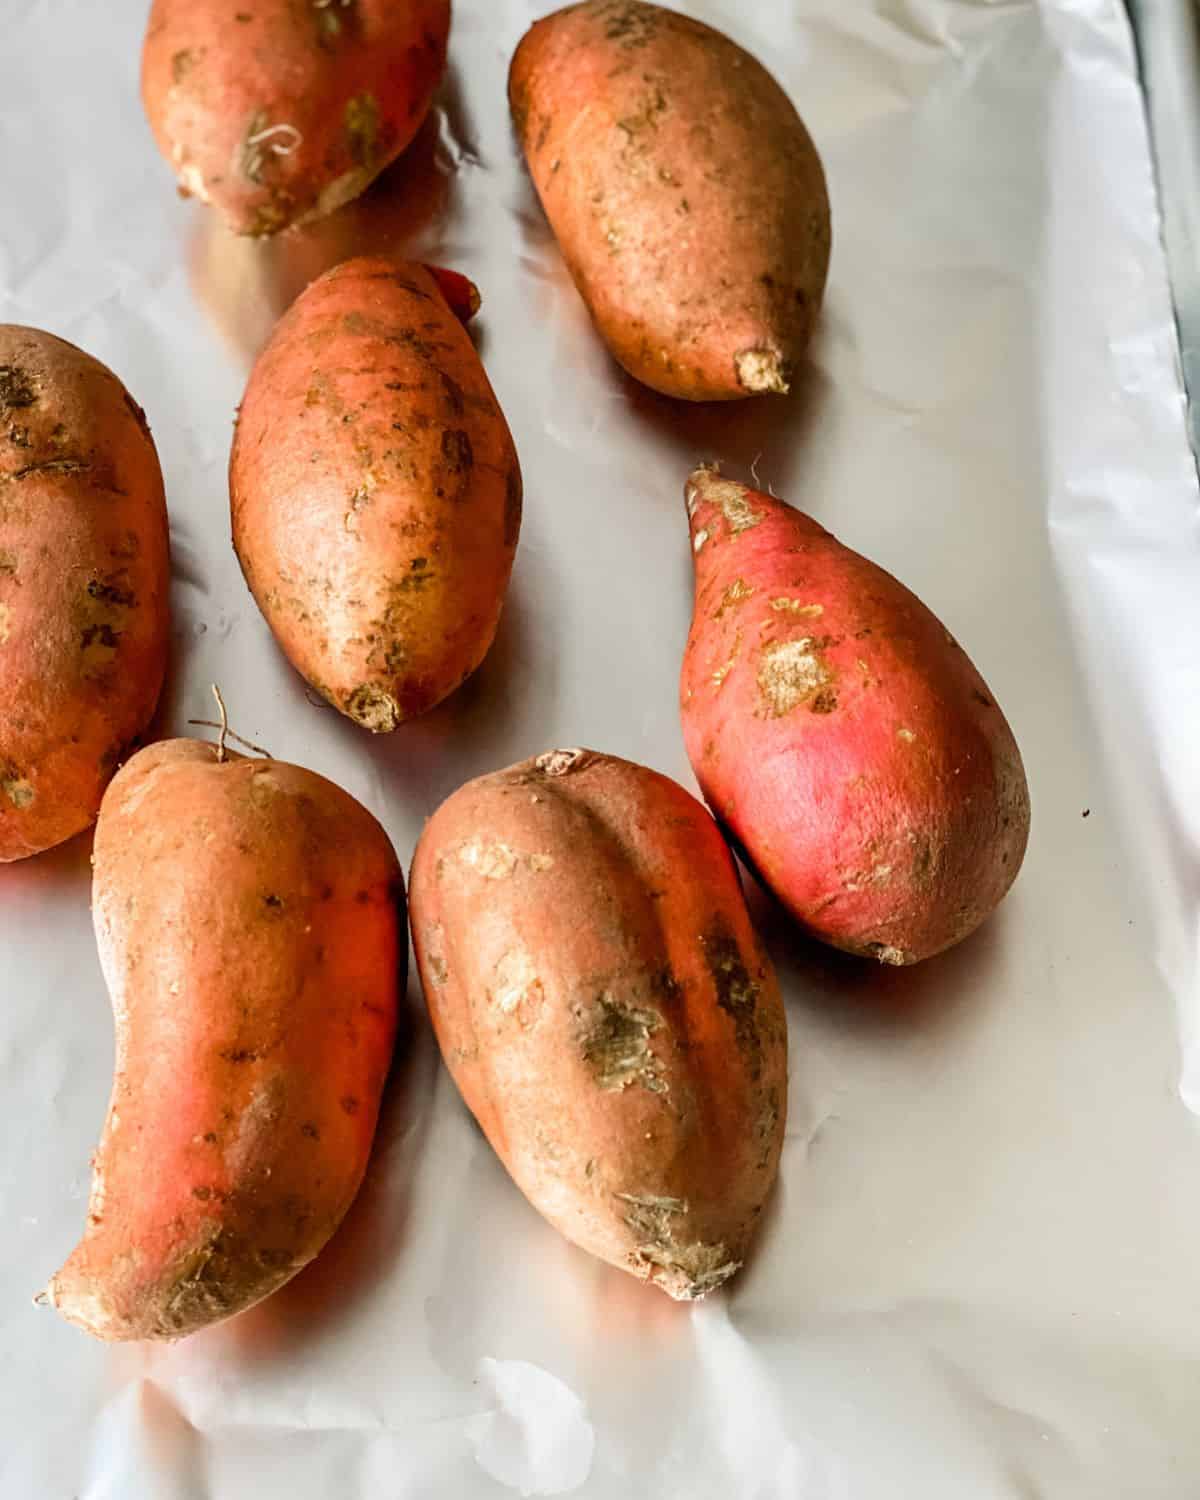 roasted sweet potatoes on a sheet pan.